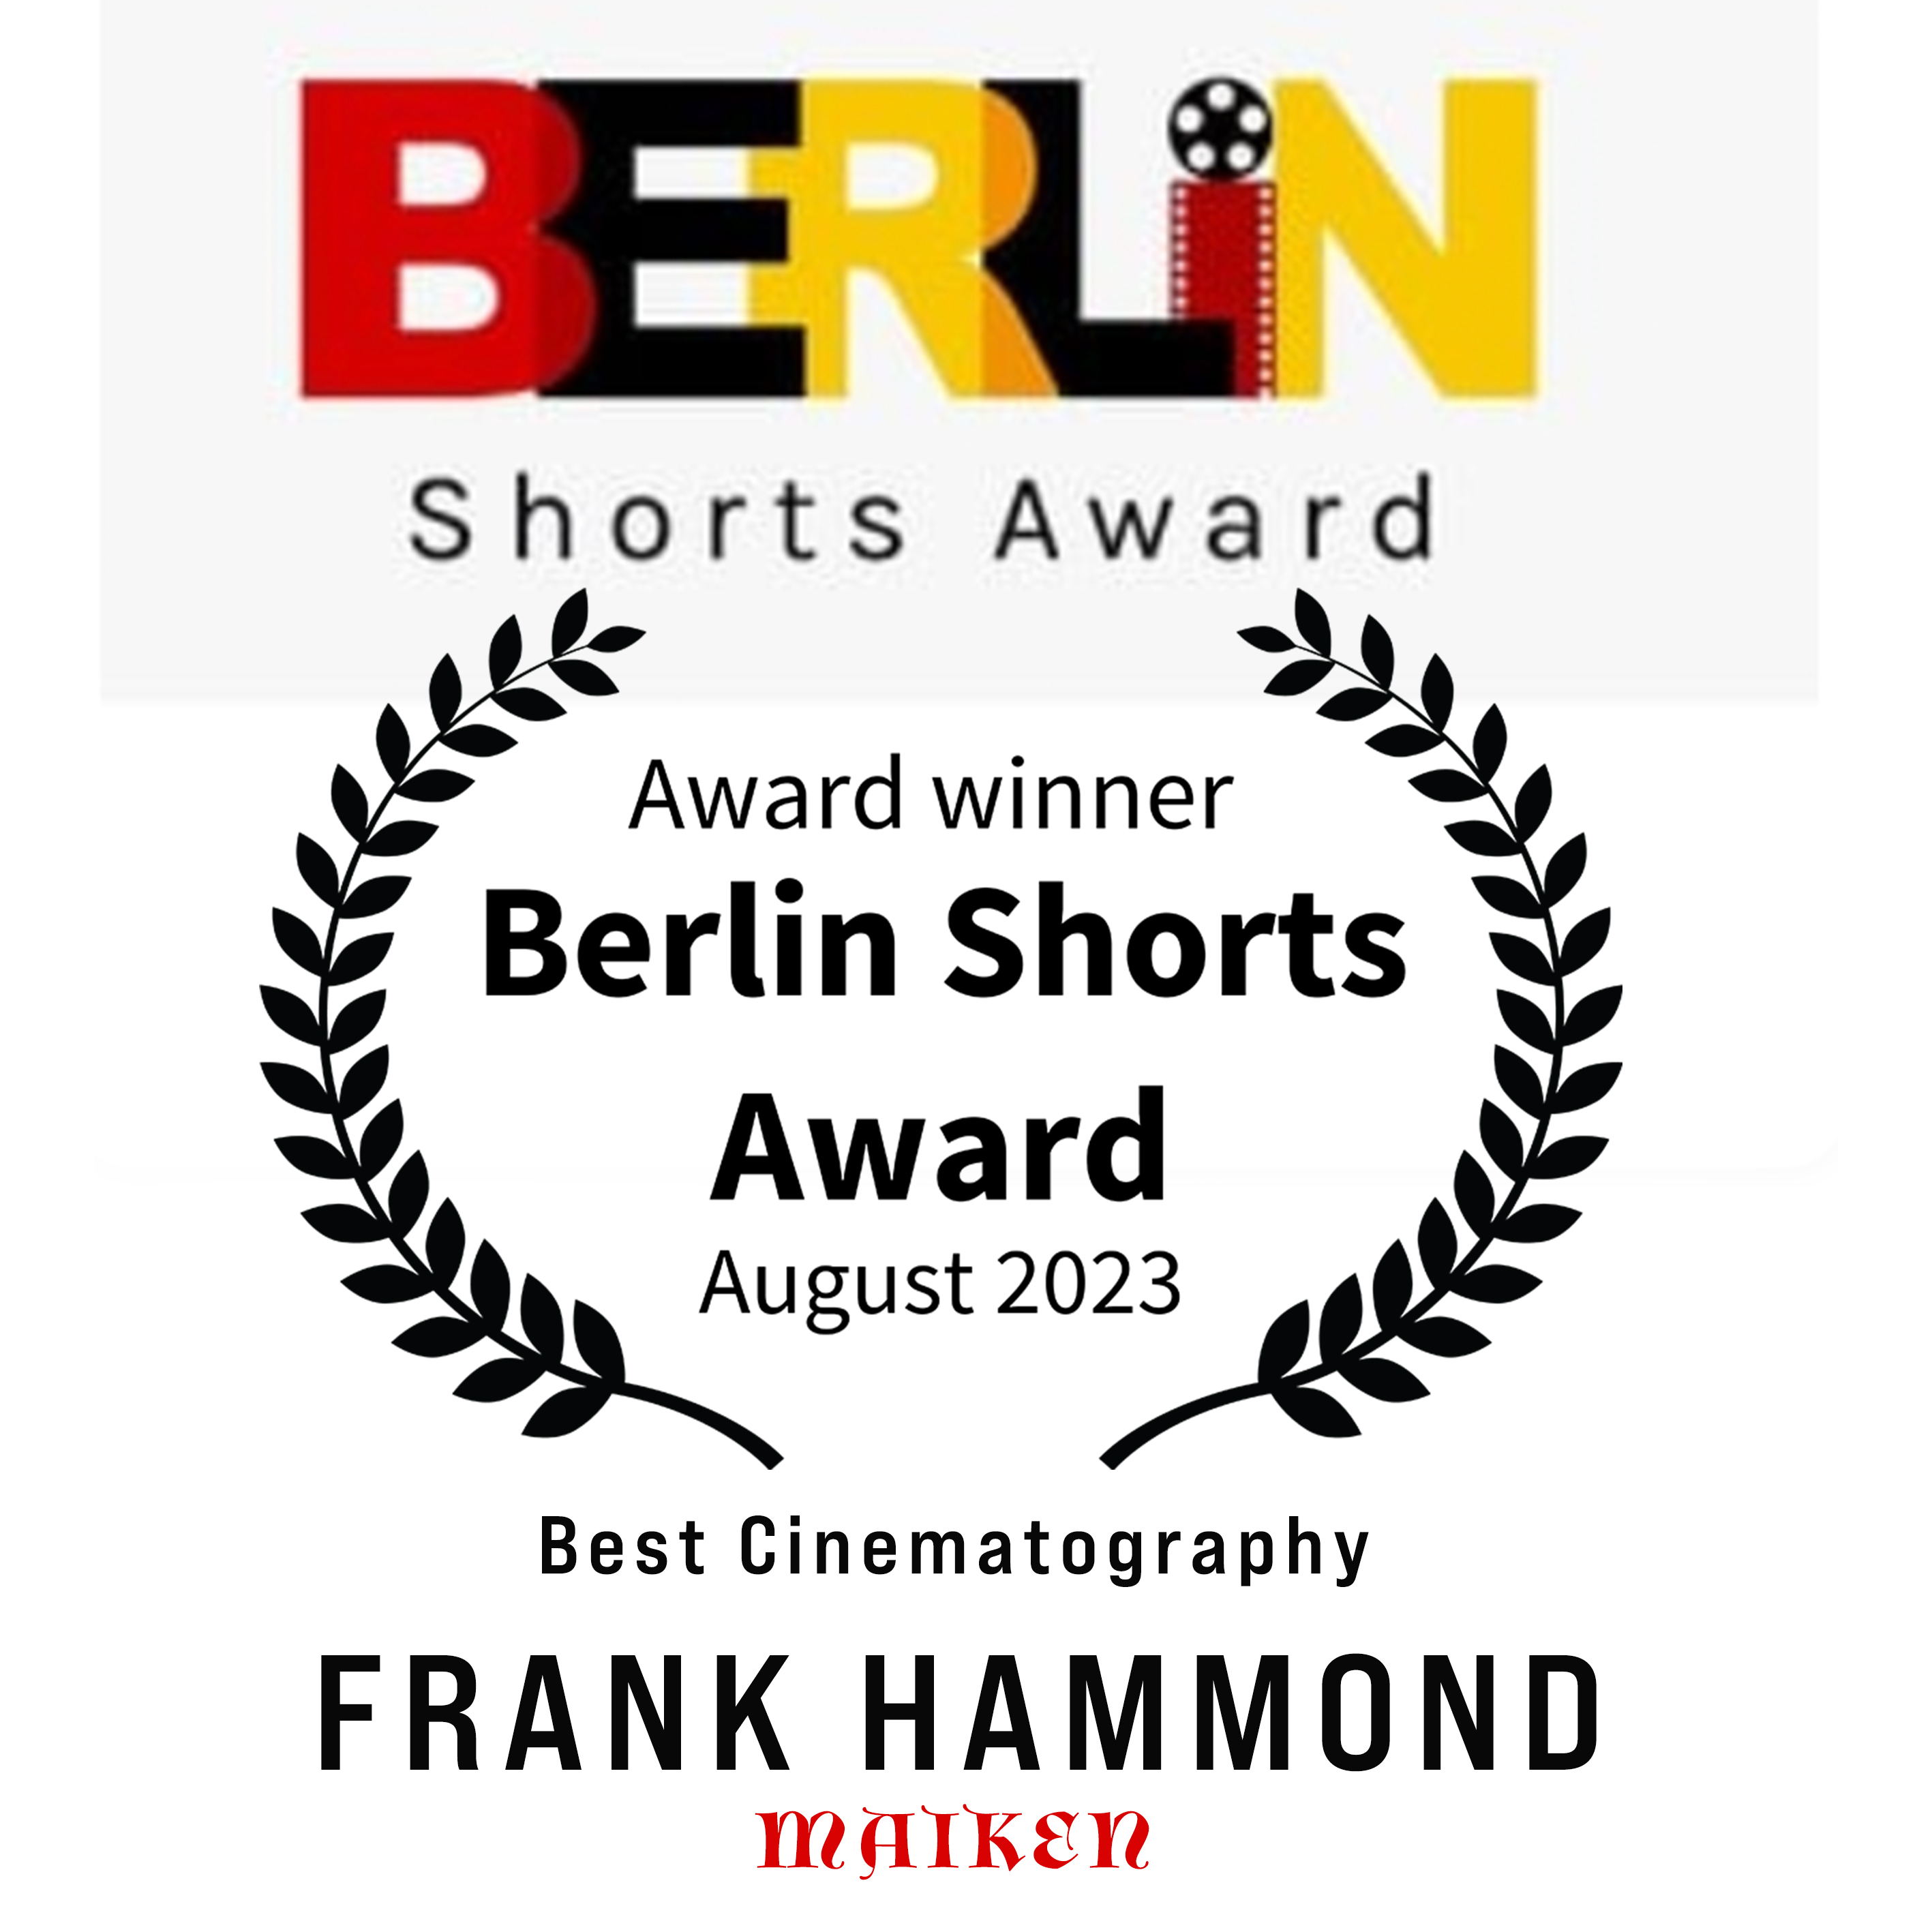 awards/BERLIN SHORTS AWARD.jpg